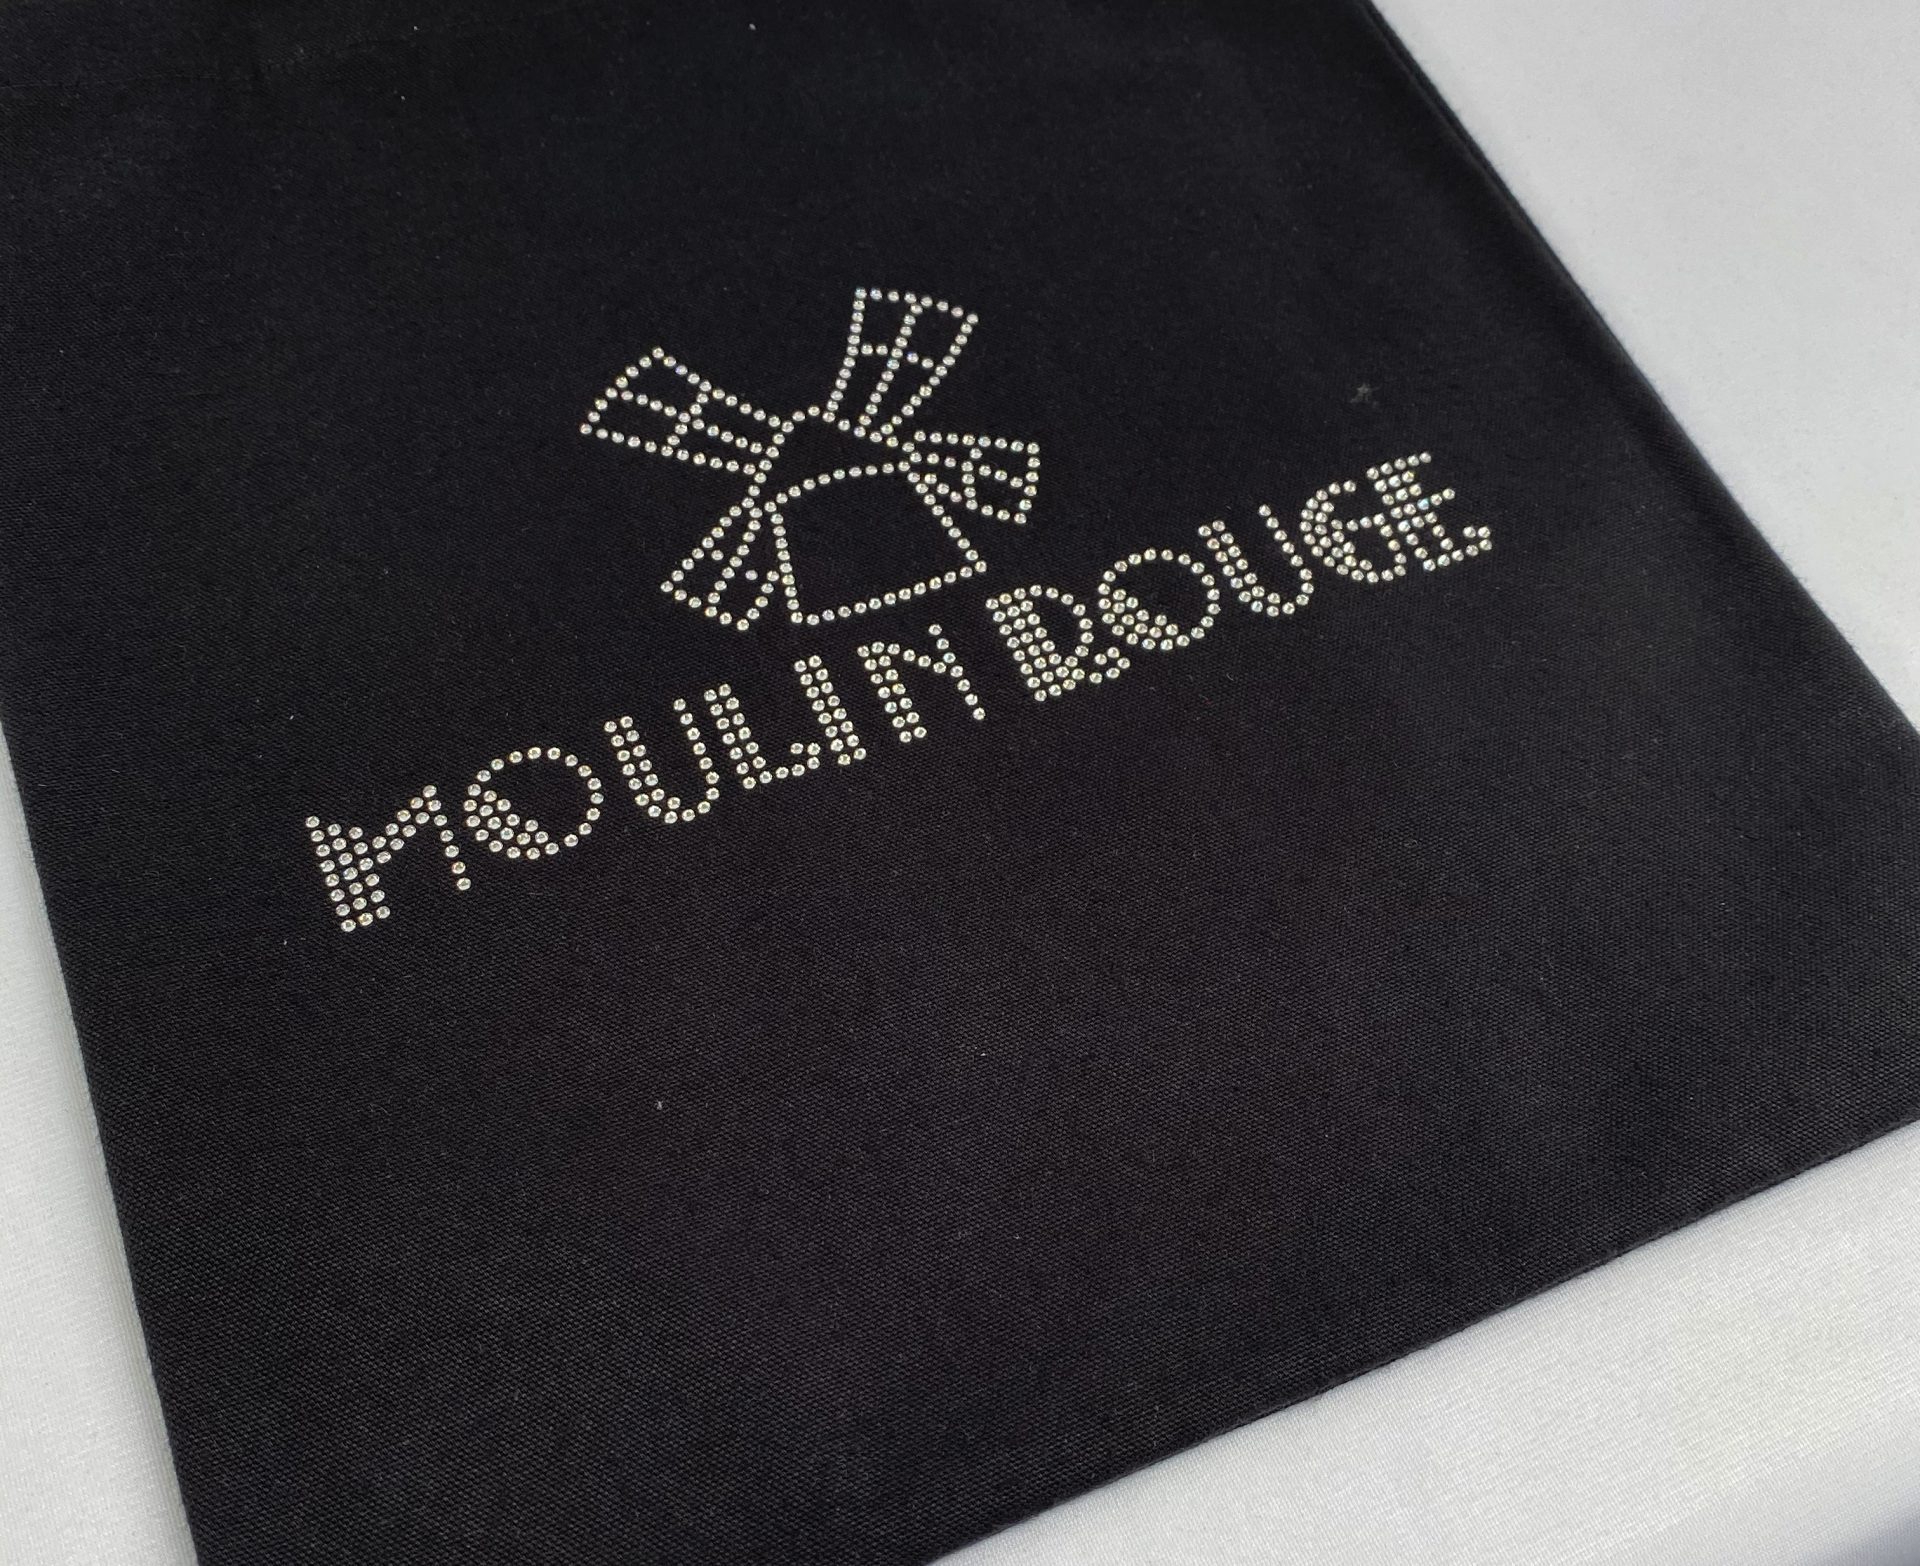 Swarovski® Moulin Rouge tote bag